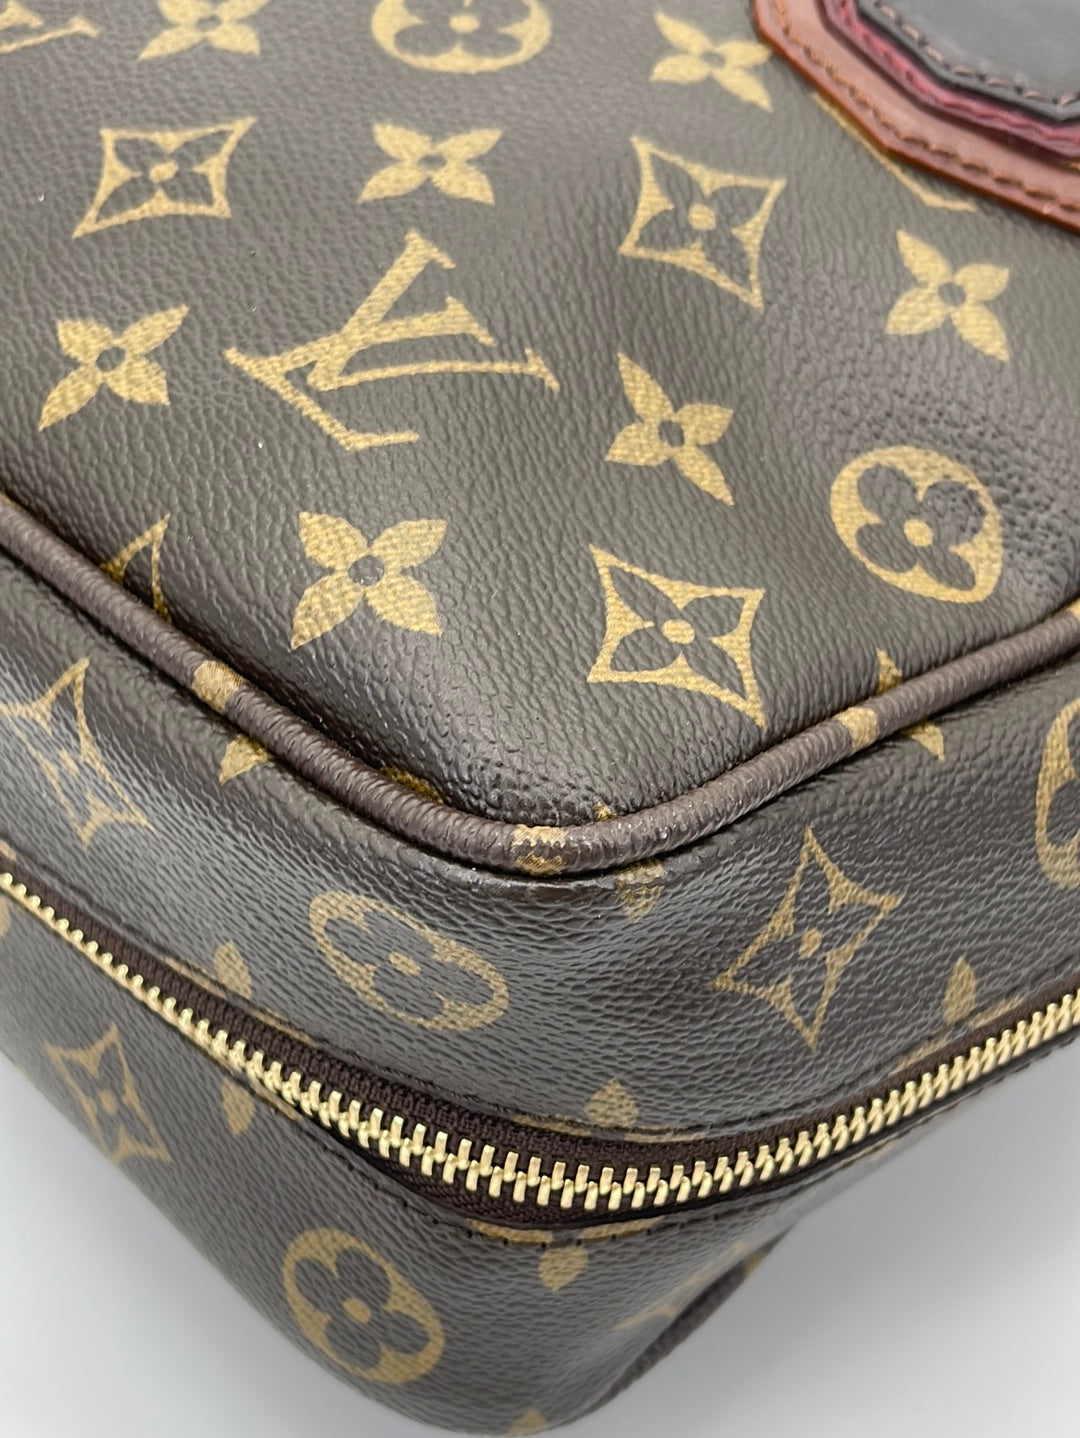 Louis Vuitton Replica Garment Bag